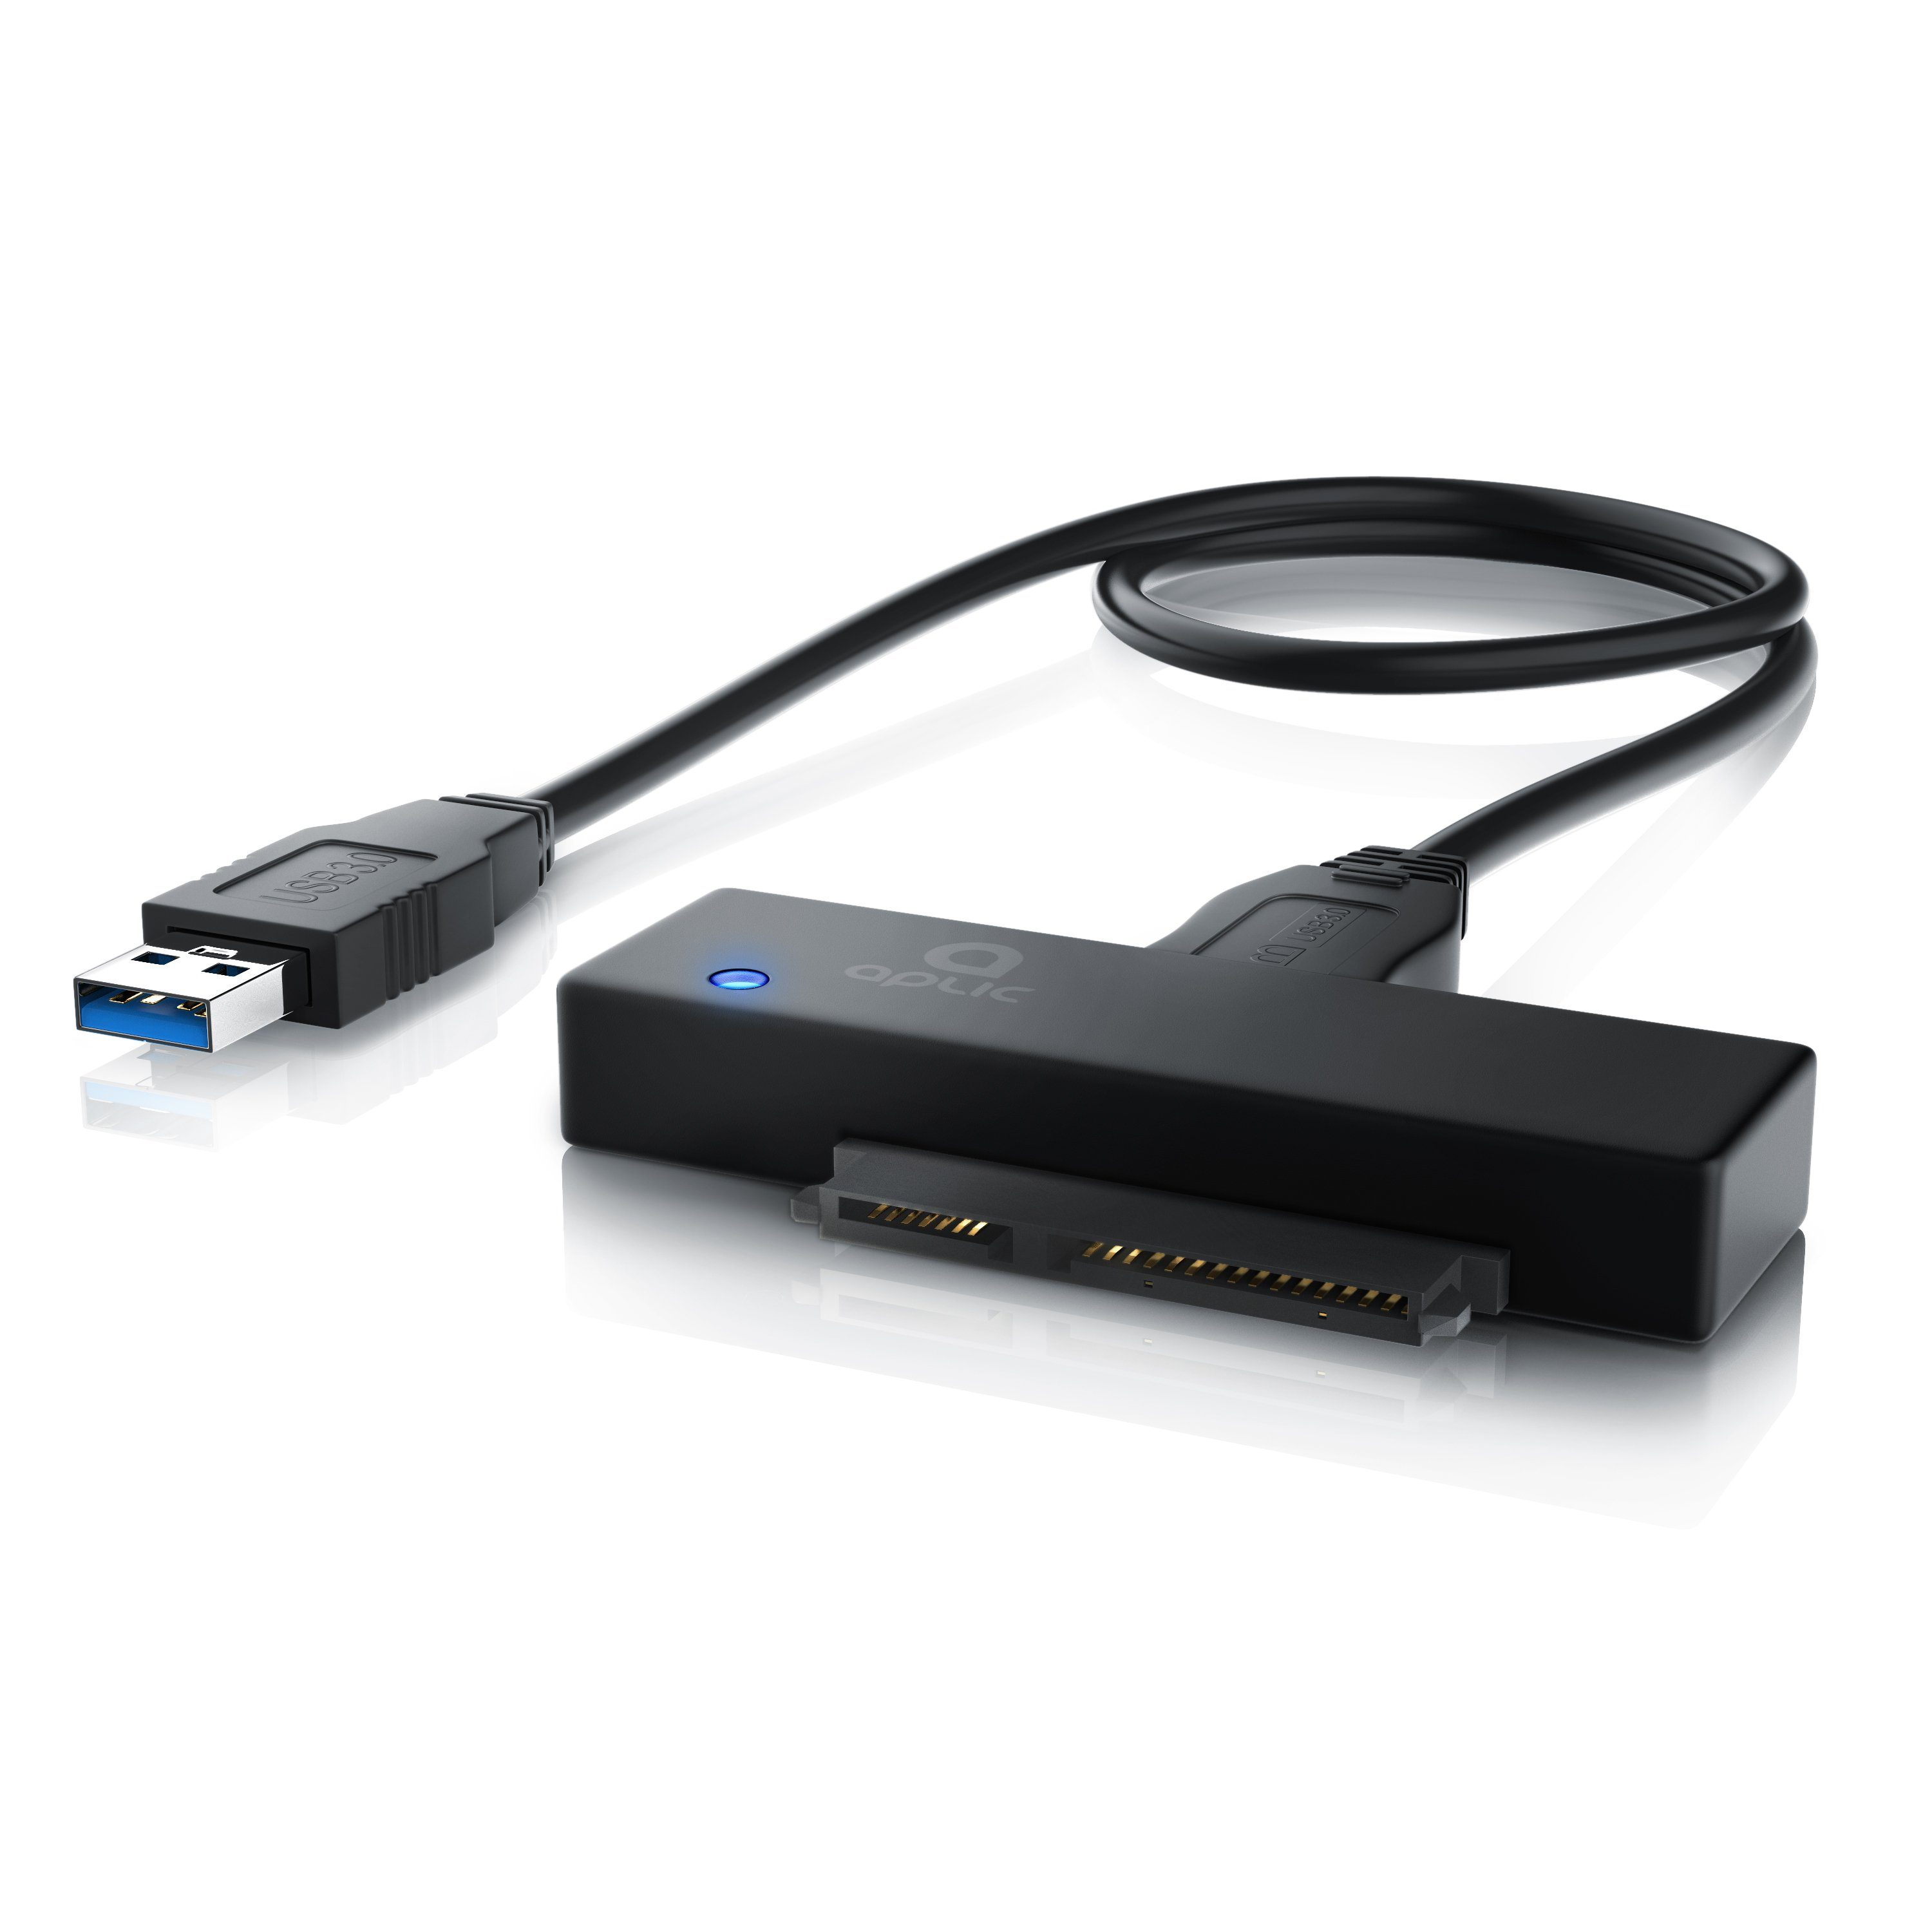 Aplic Computer-Adapter SATA zu USB 3.0 Typ A, SATA 1/2/3 Festplatten Konverter Kabel mit Netzteil